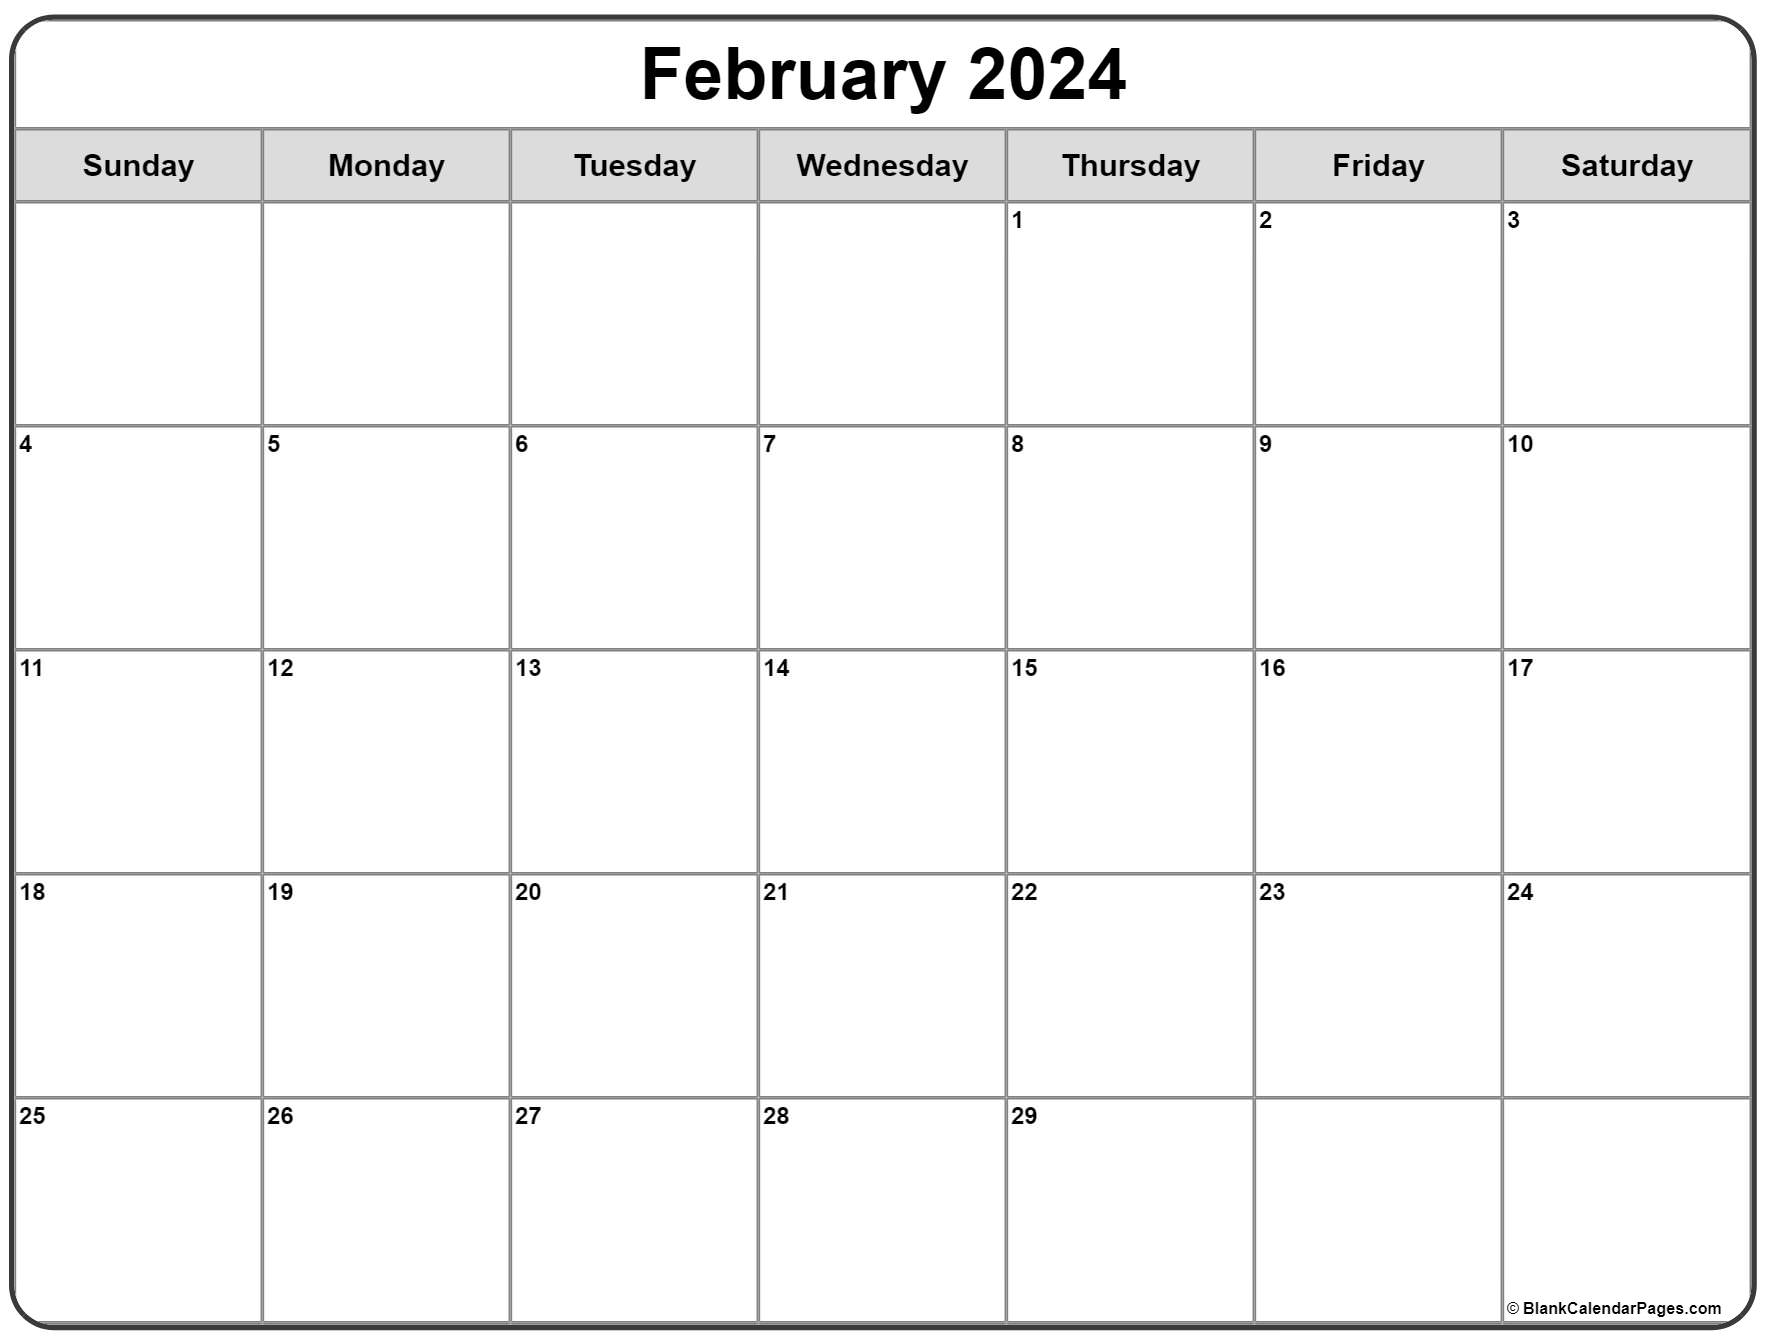 Free Printable February 2022 Calendar February 2022 Calendar | Free Printable Calendar Templates